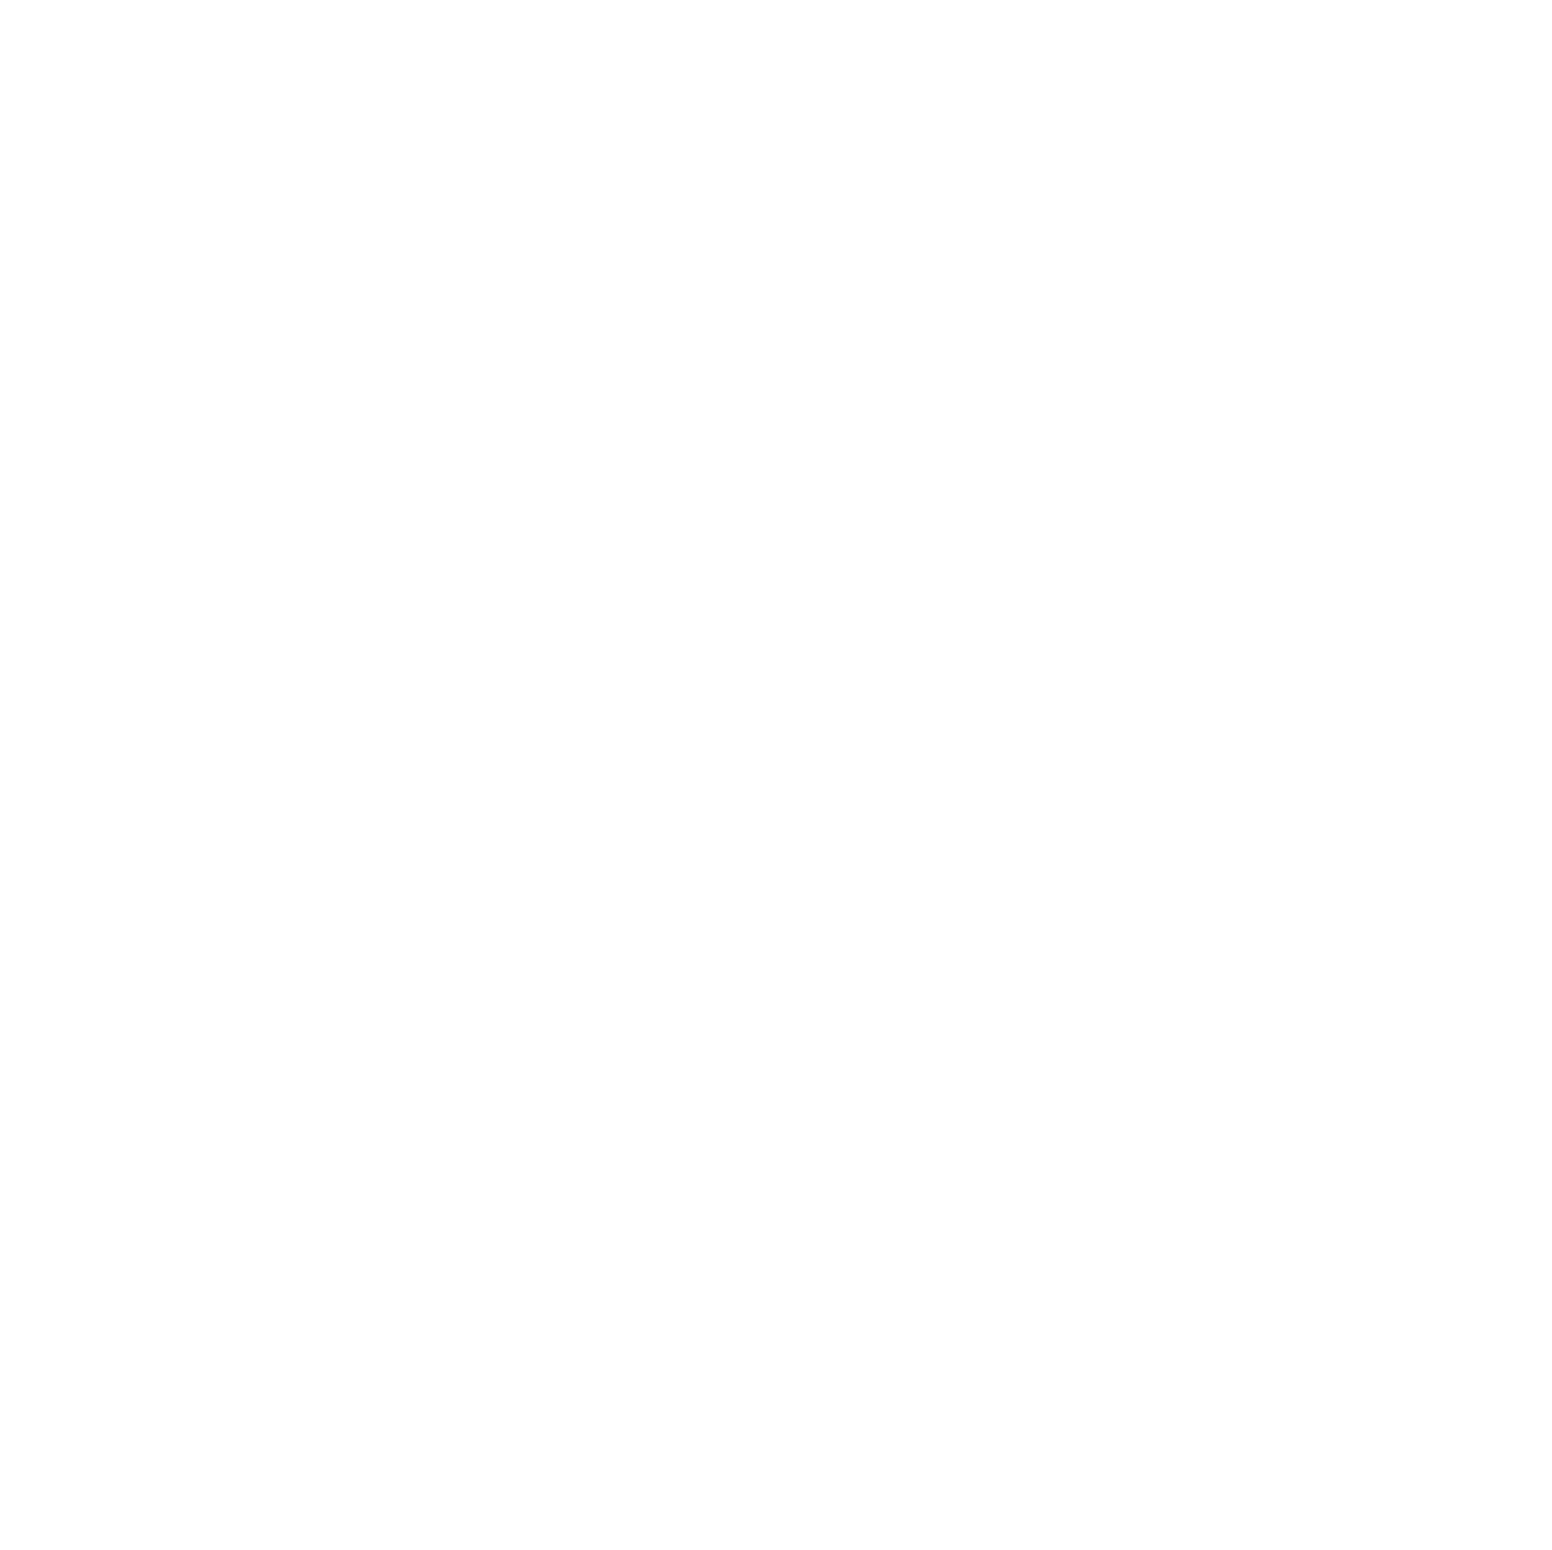 Mural Oncology logo for dark backgrounds (transparent PNG)